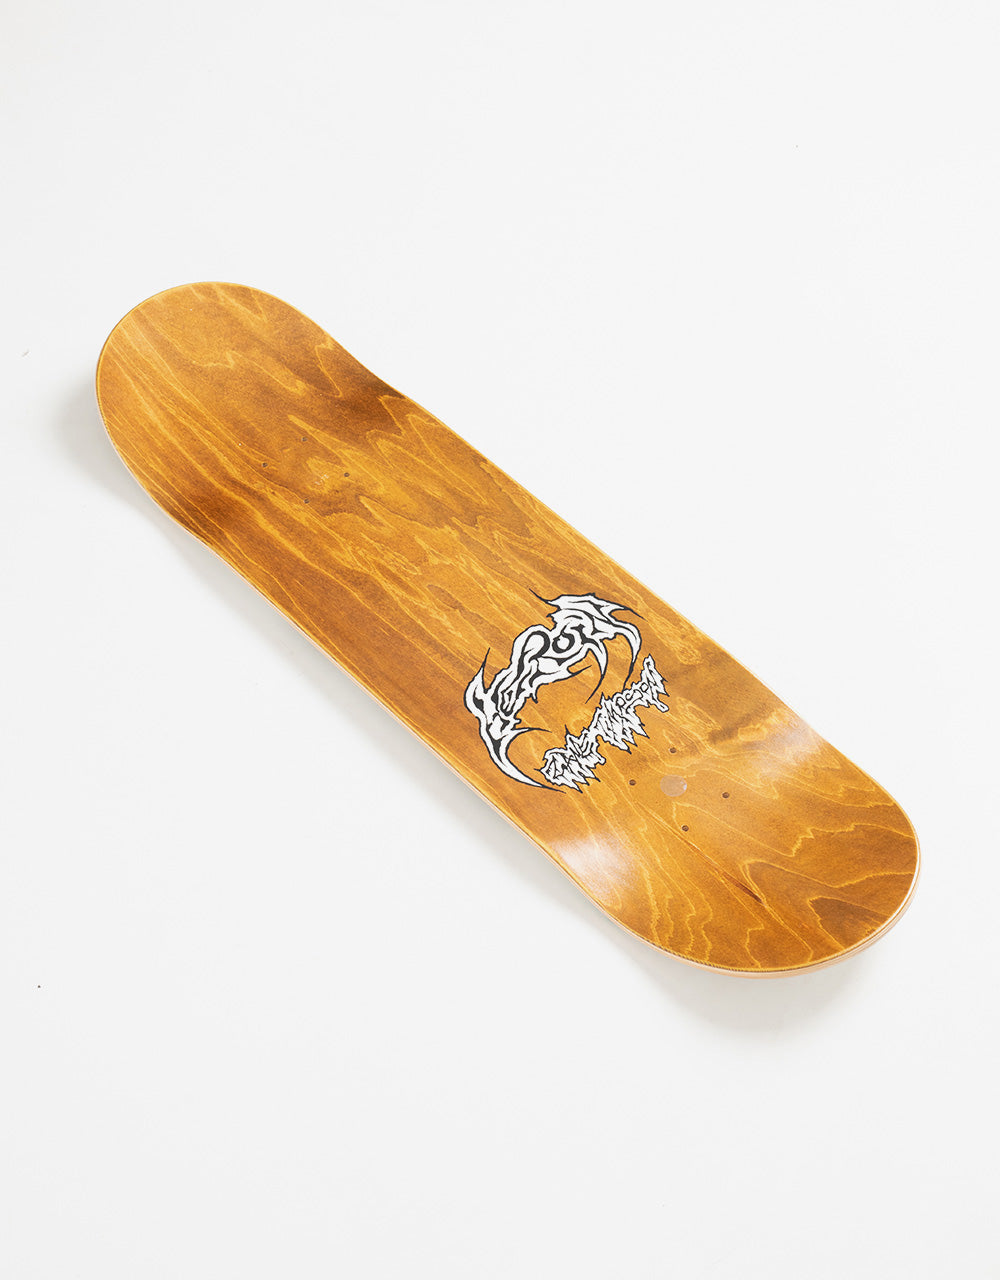 Heroin Zane Theatre Skateboard Deck - 8.75"